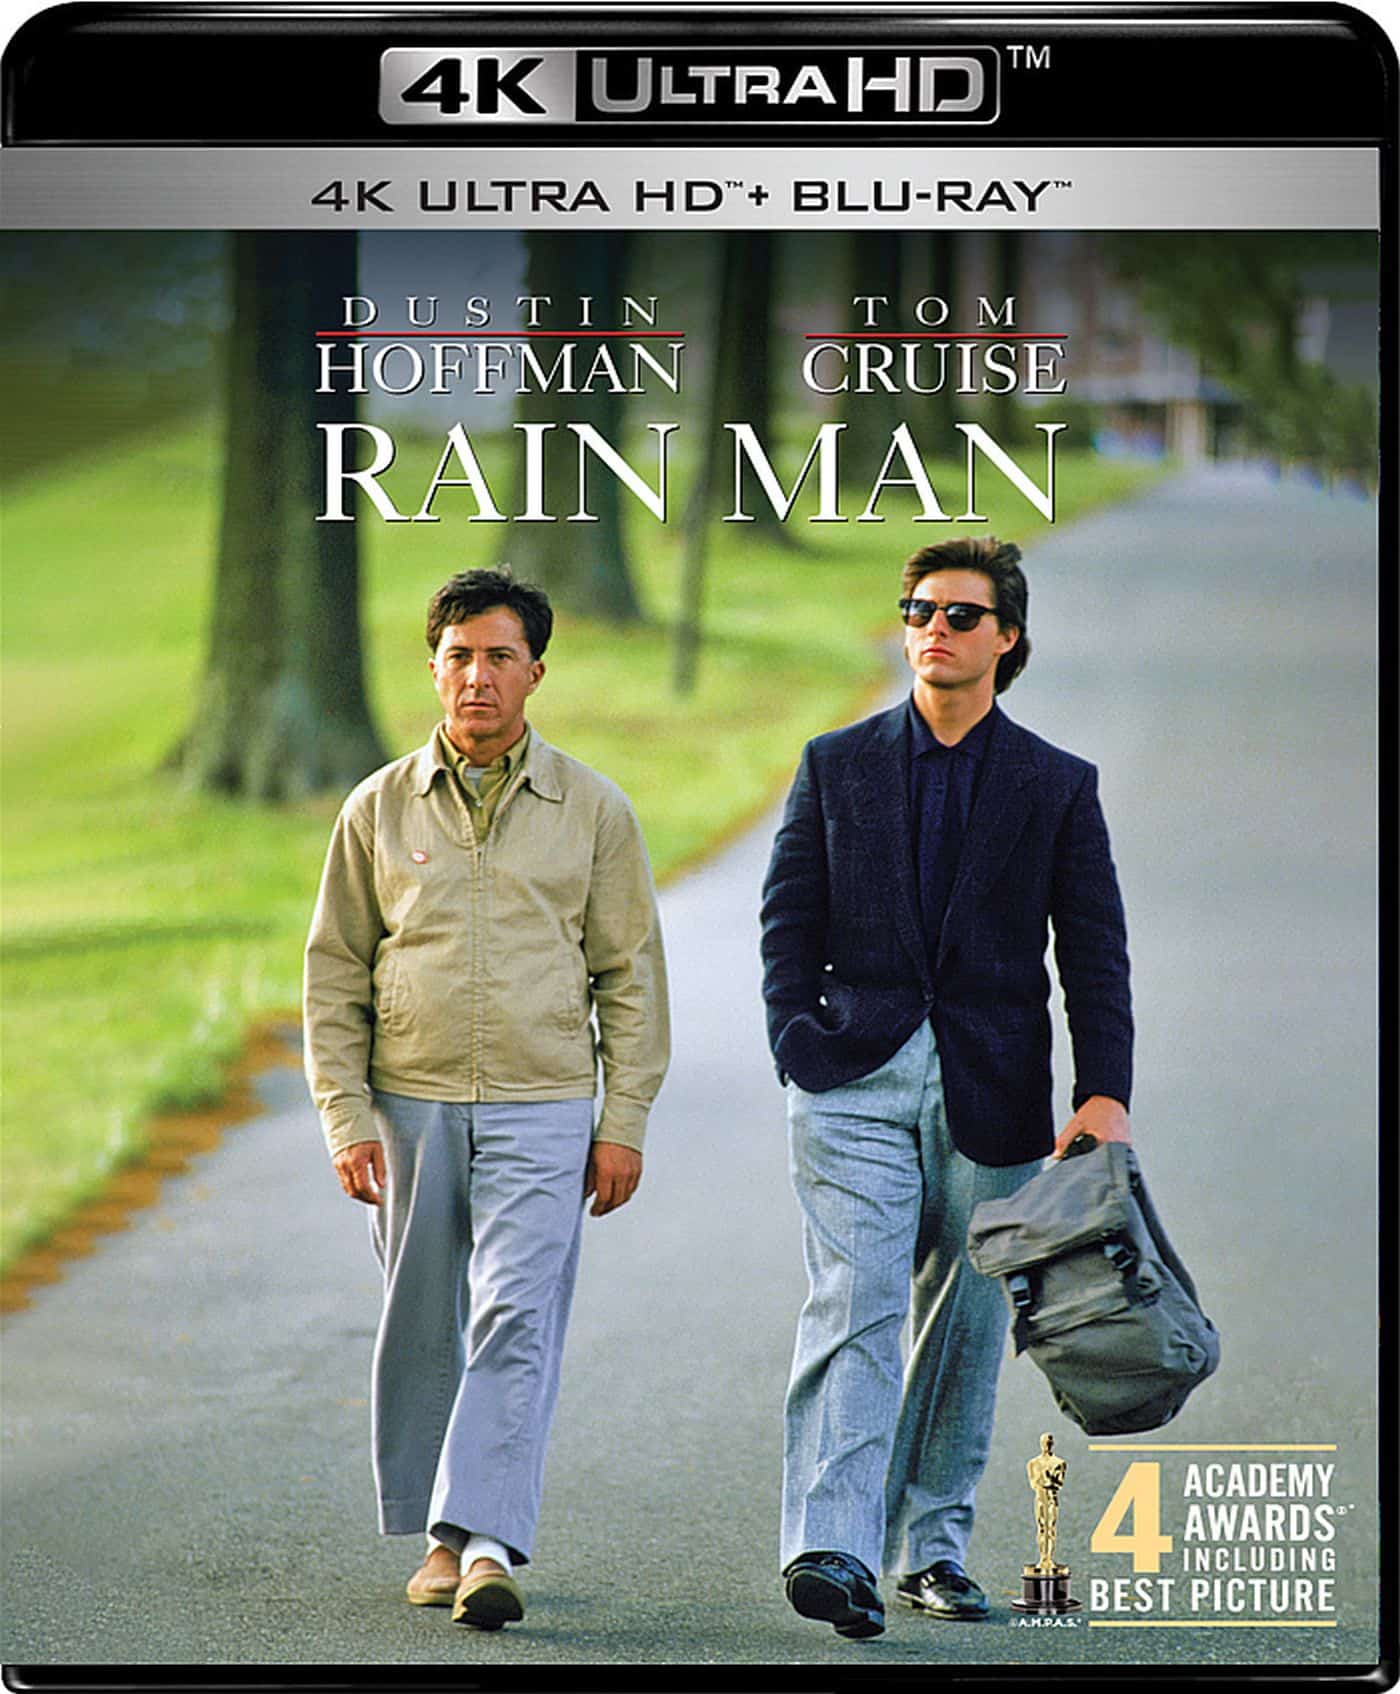 Rain Man goes 4K UHD on May 30th from MVD 19